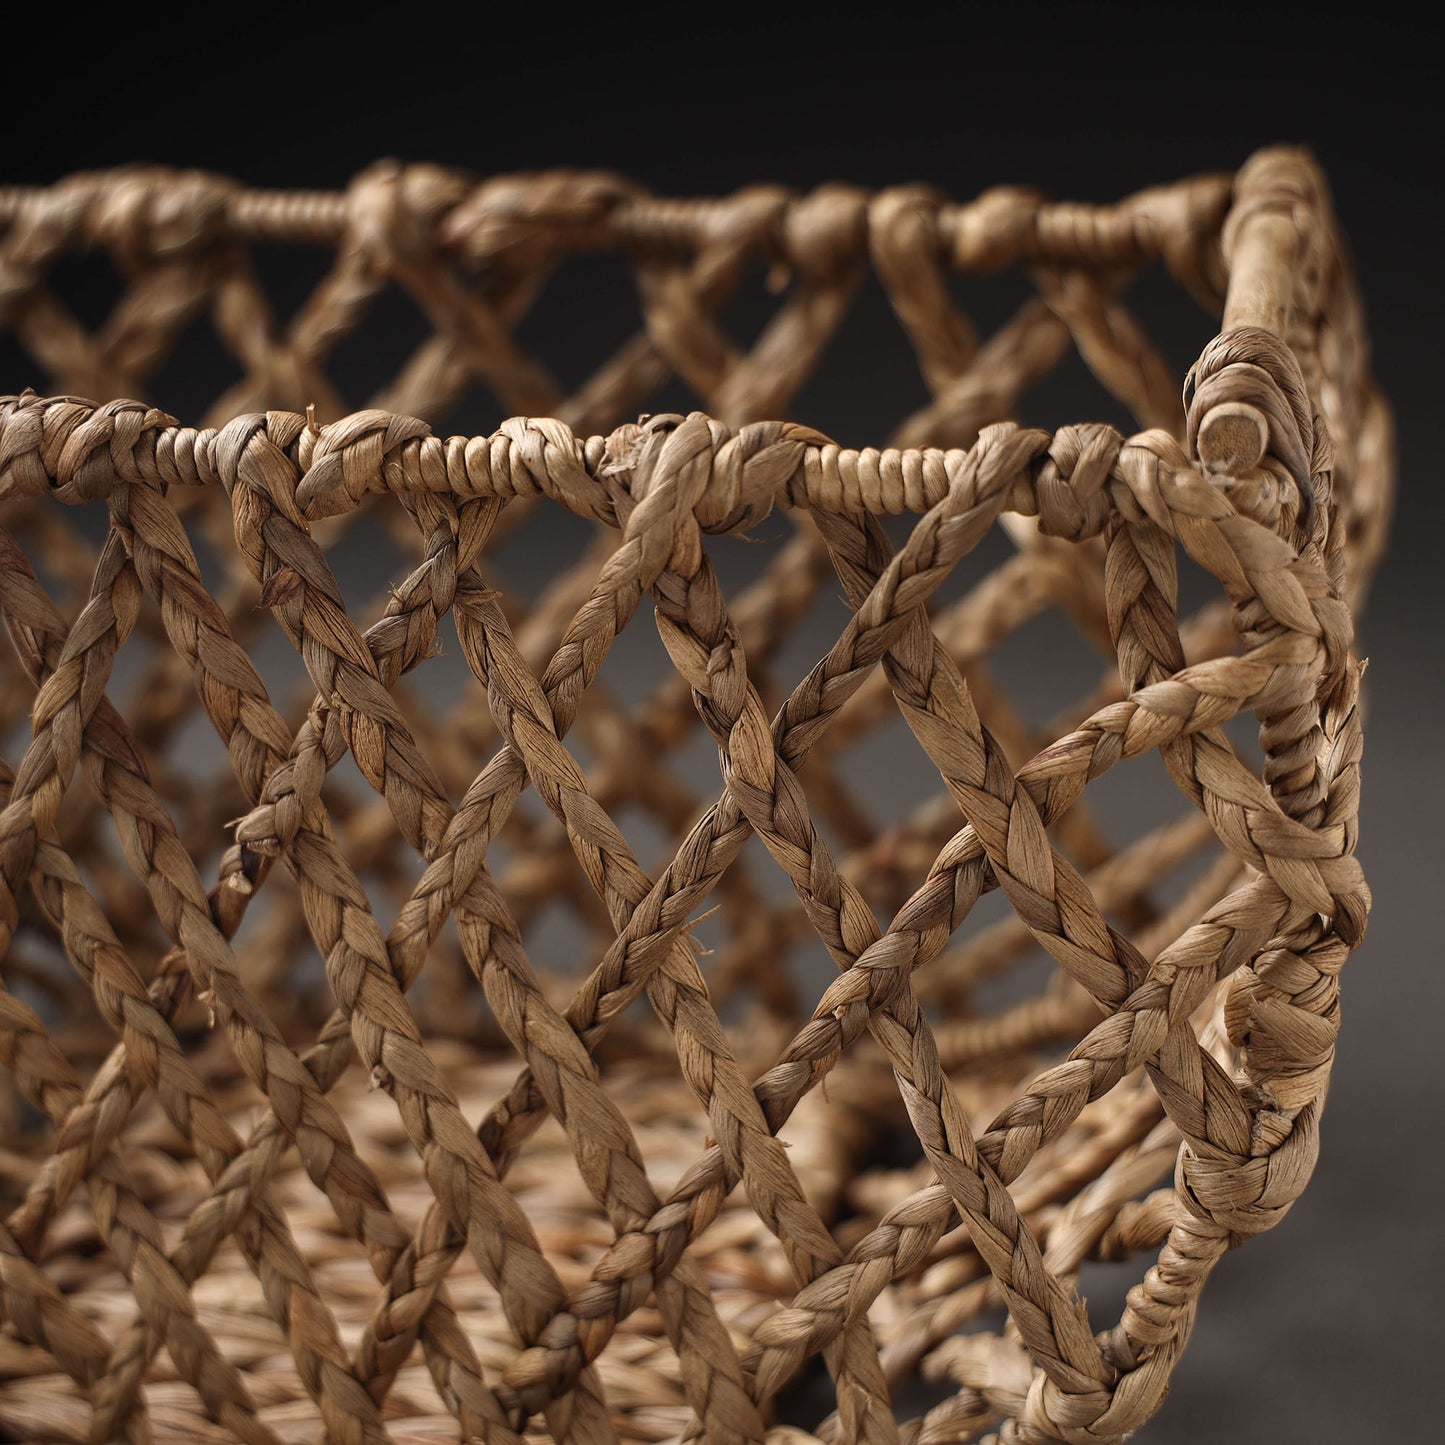 Handcrafted Organic Water Hyacinth Posh Basket